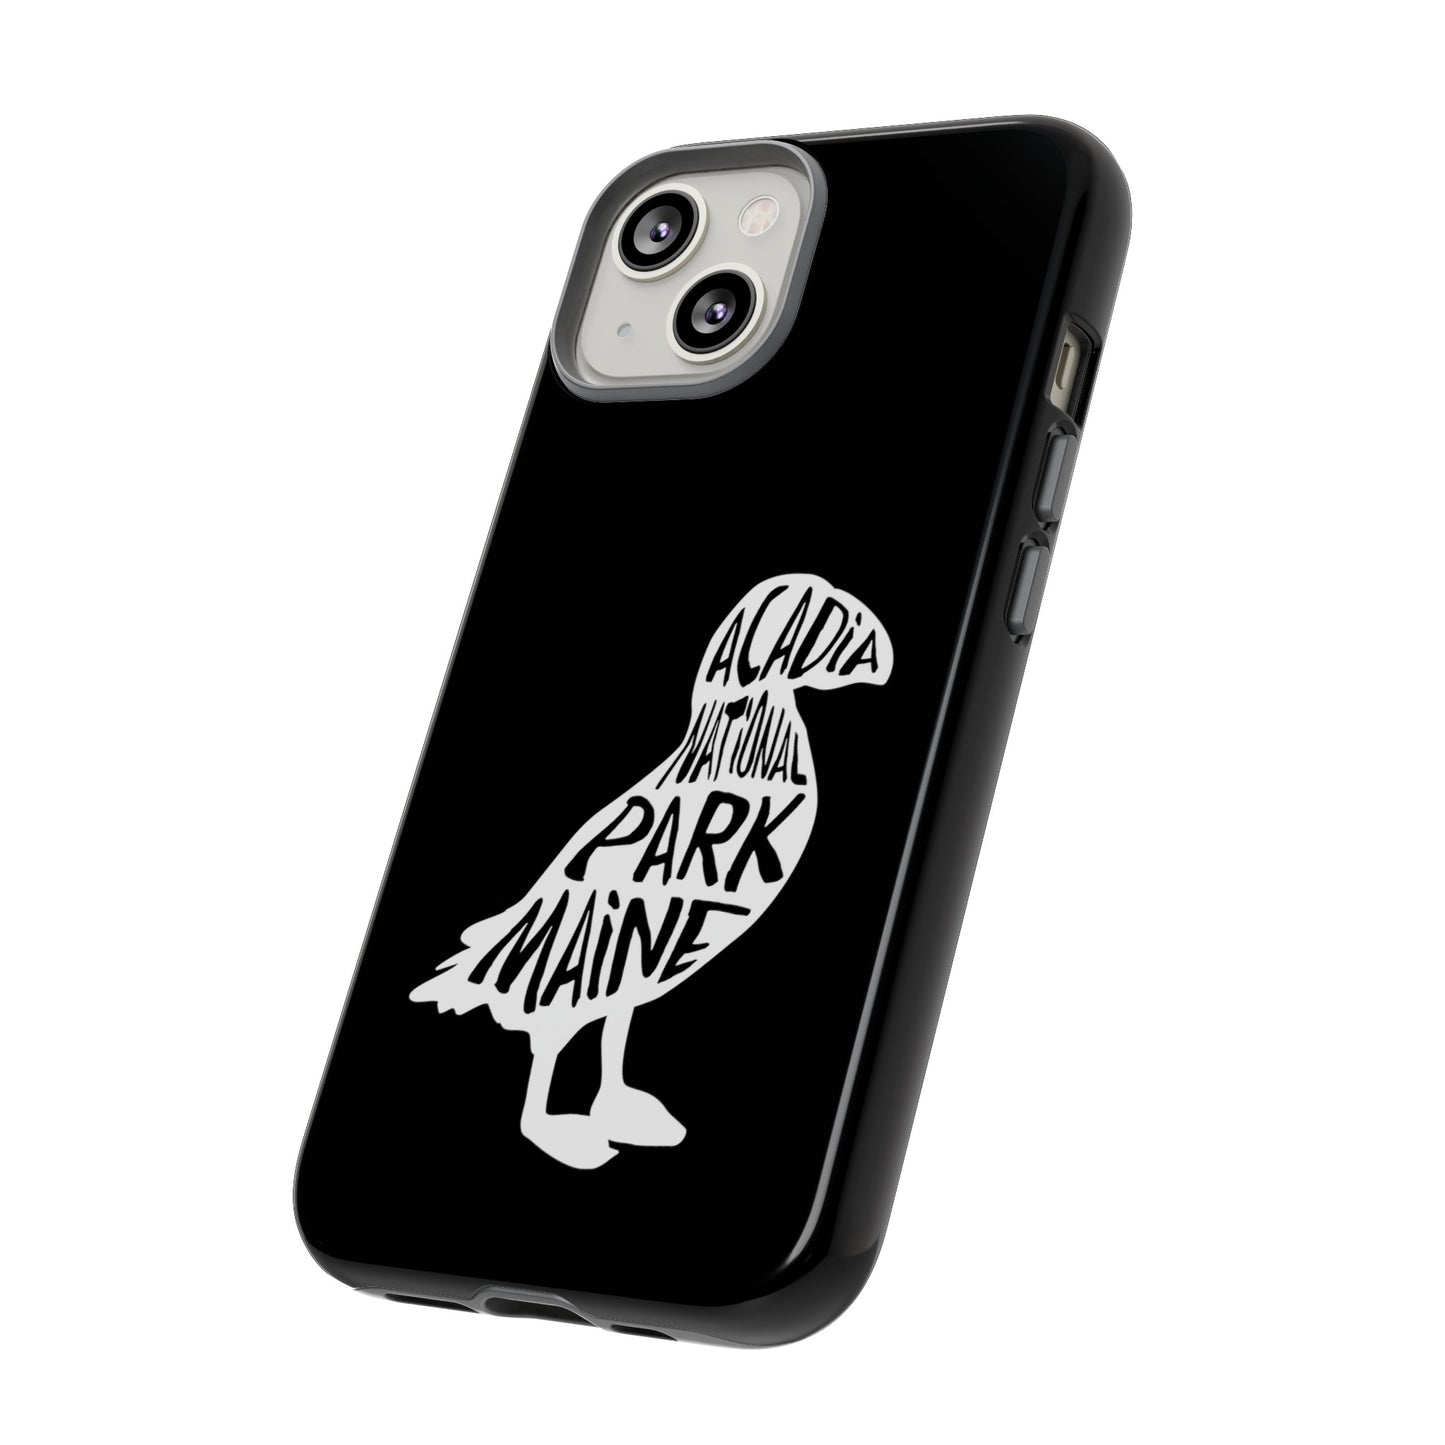 Acadia National Park Phone Case - Puffin Design